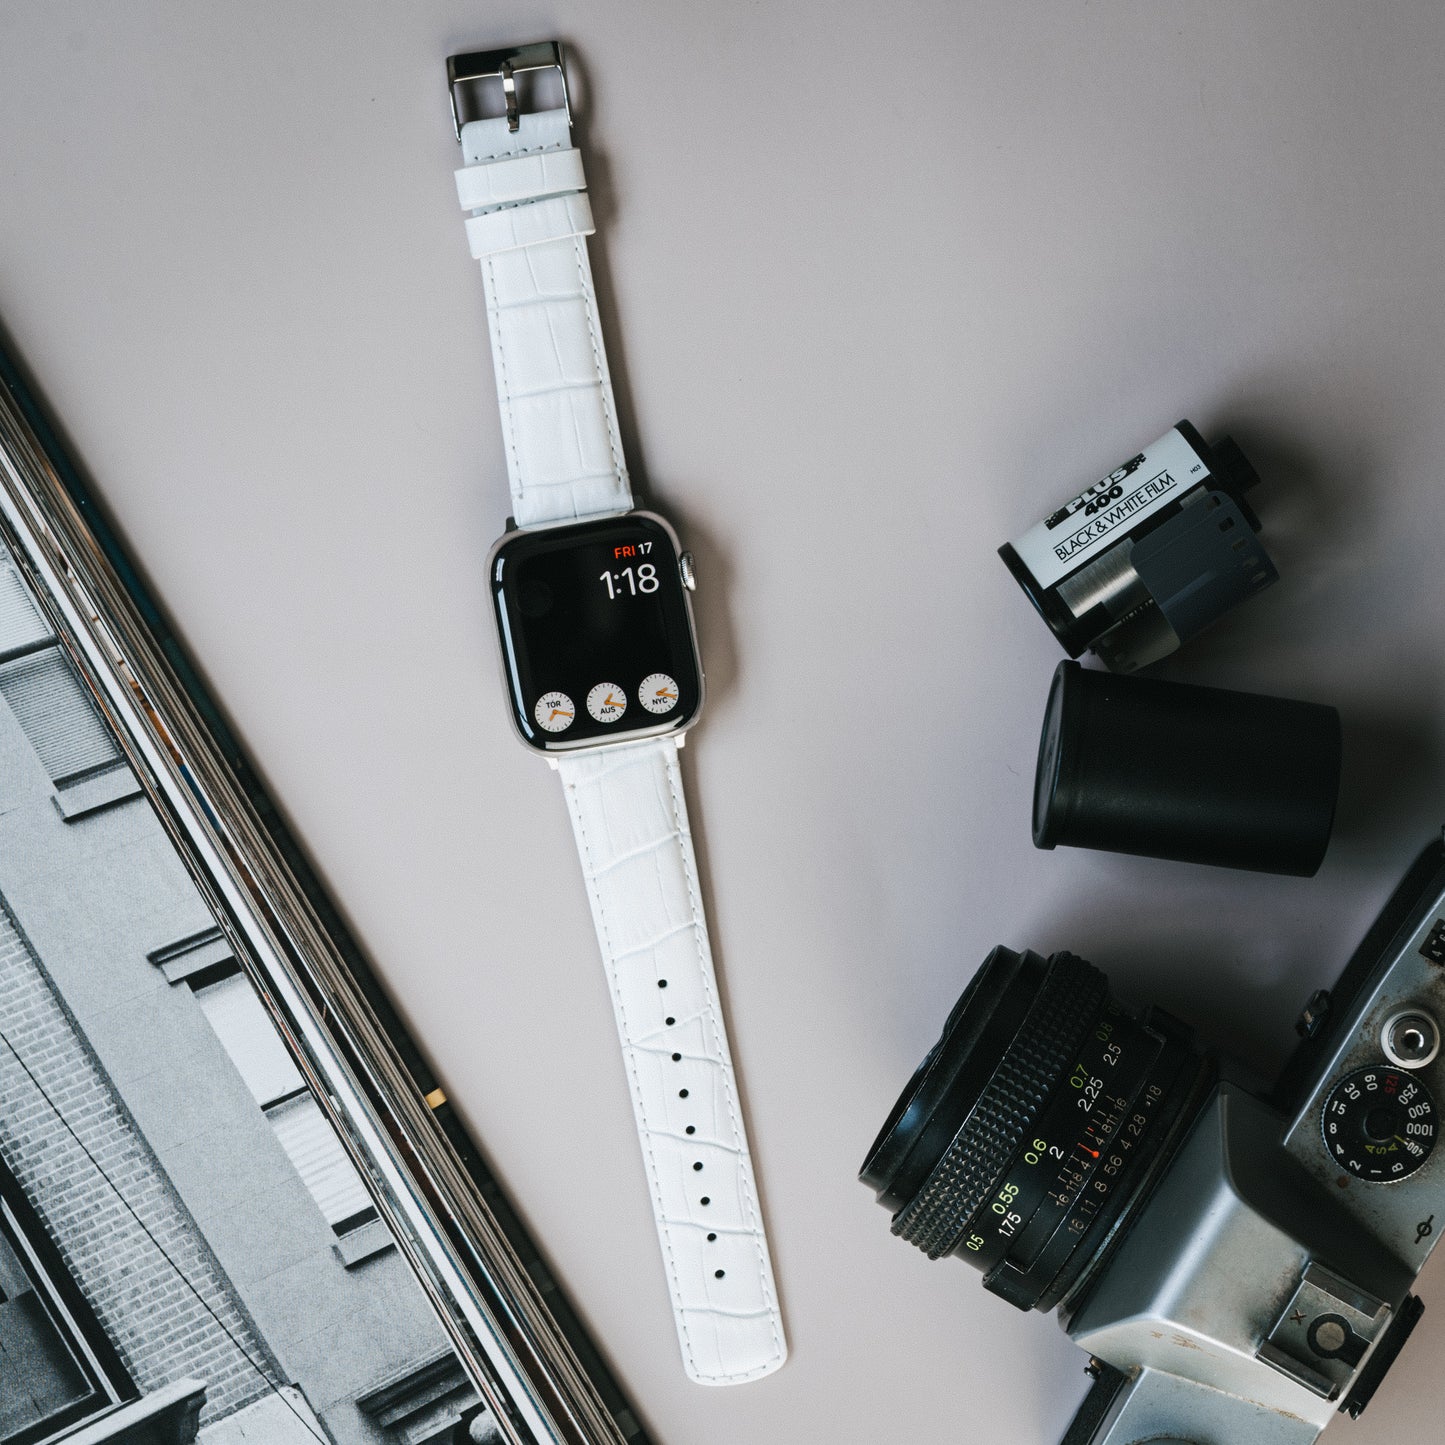 Apple Watch | White Alligator Grain Leather - Barton Watch Bands